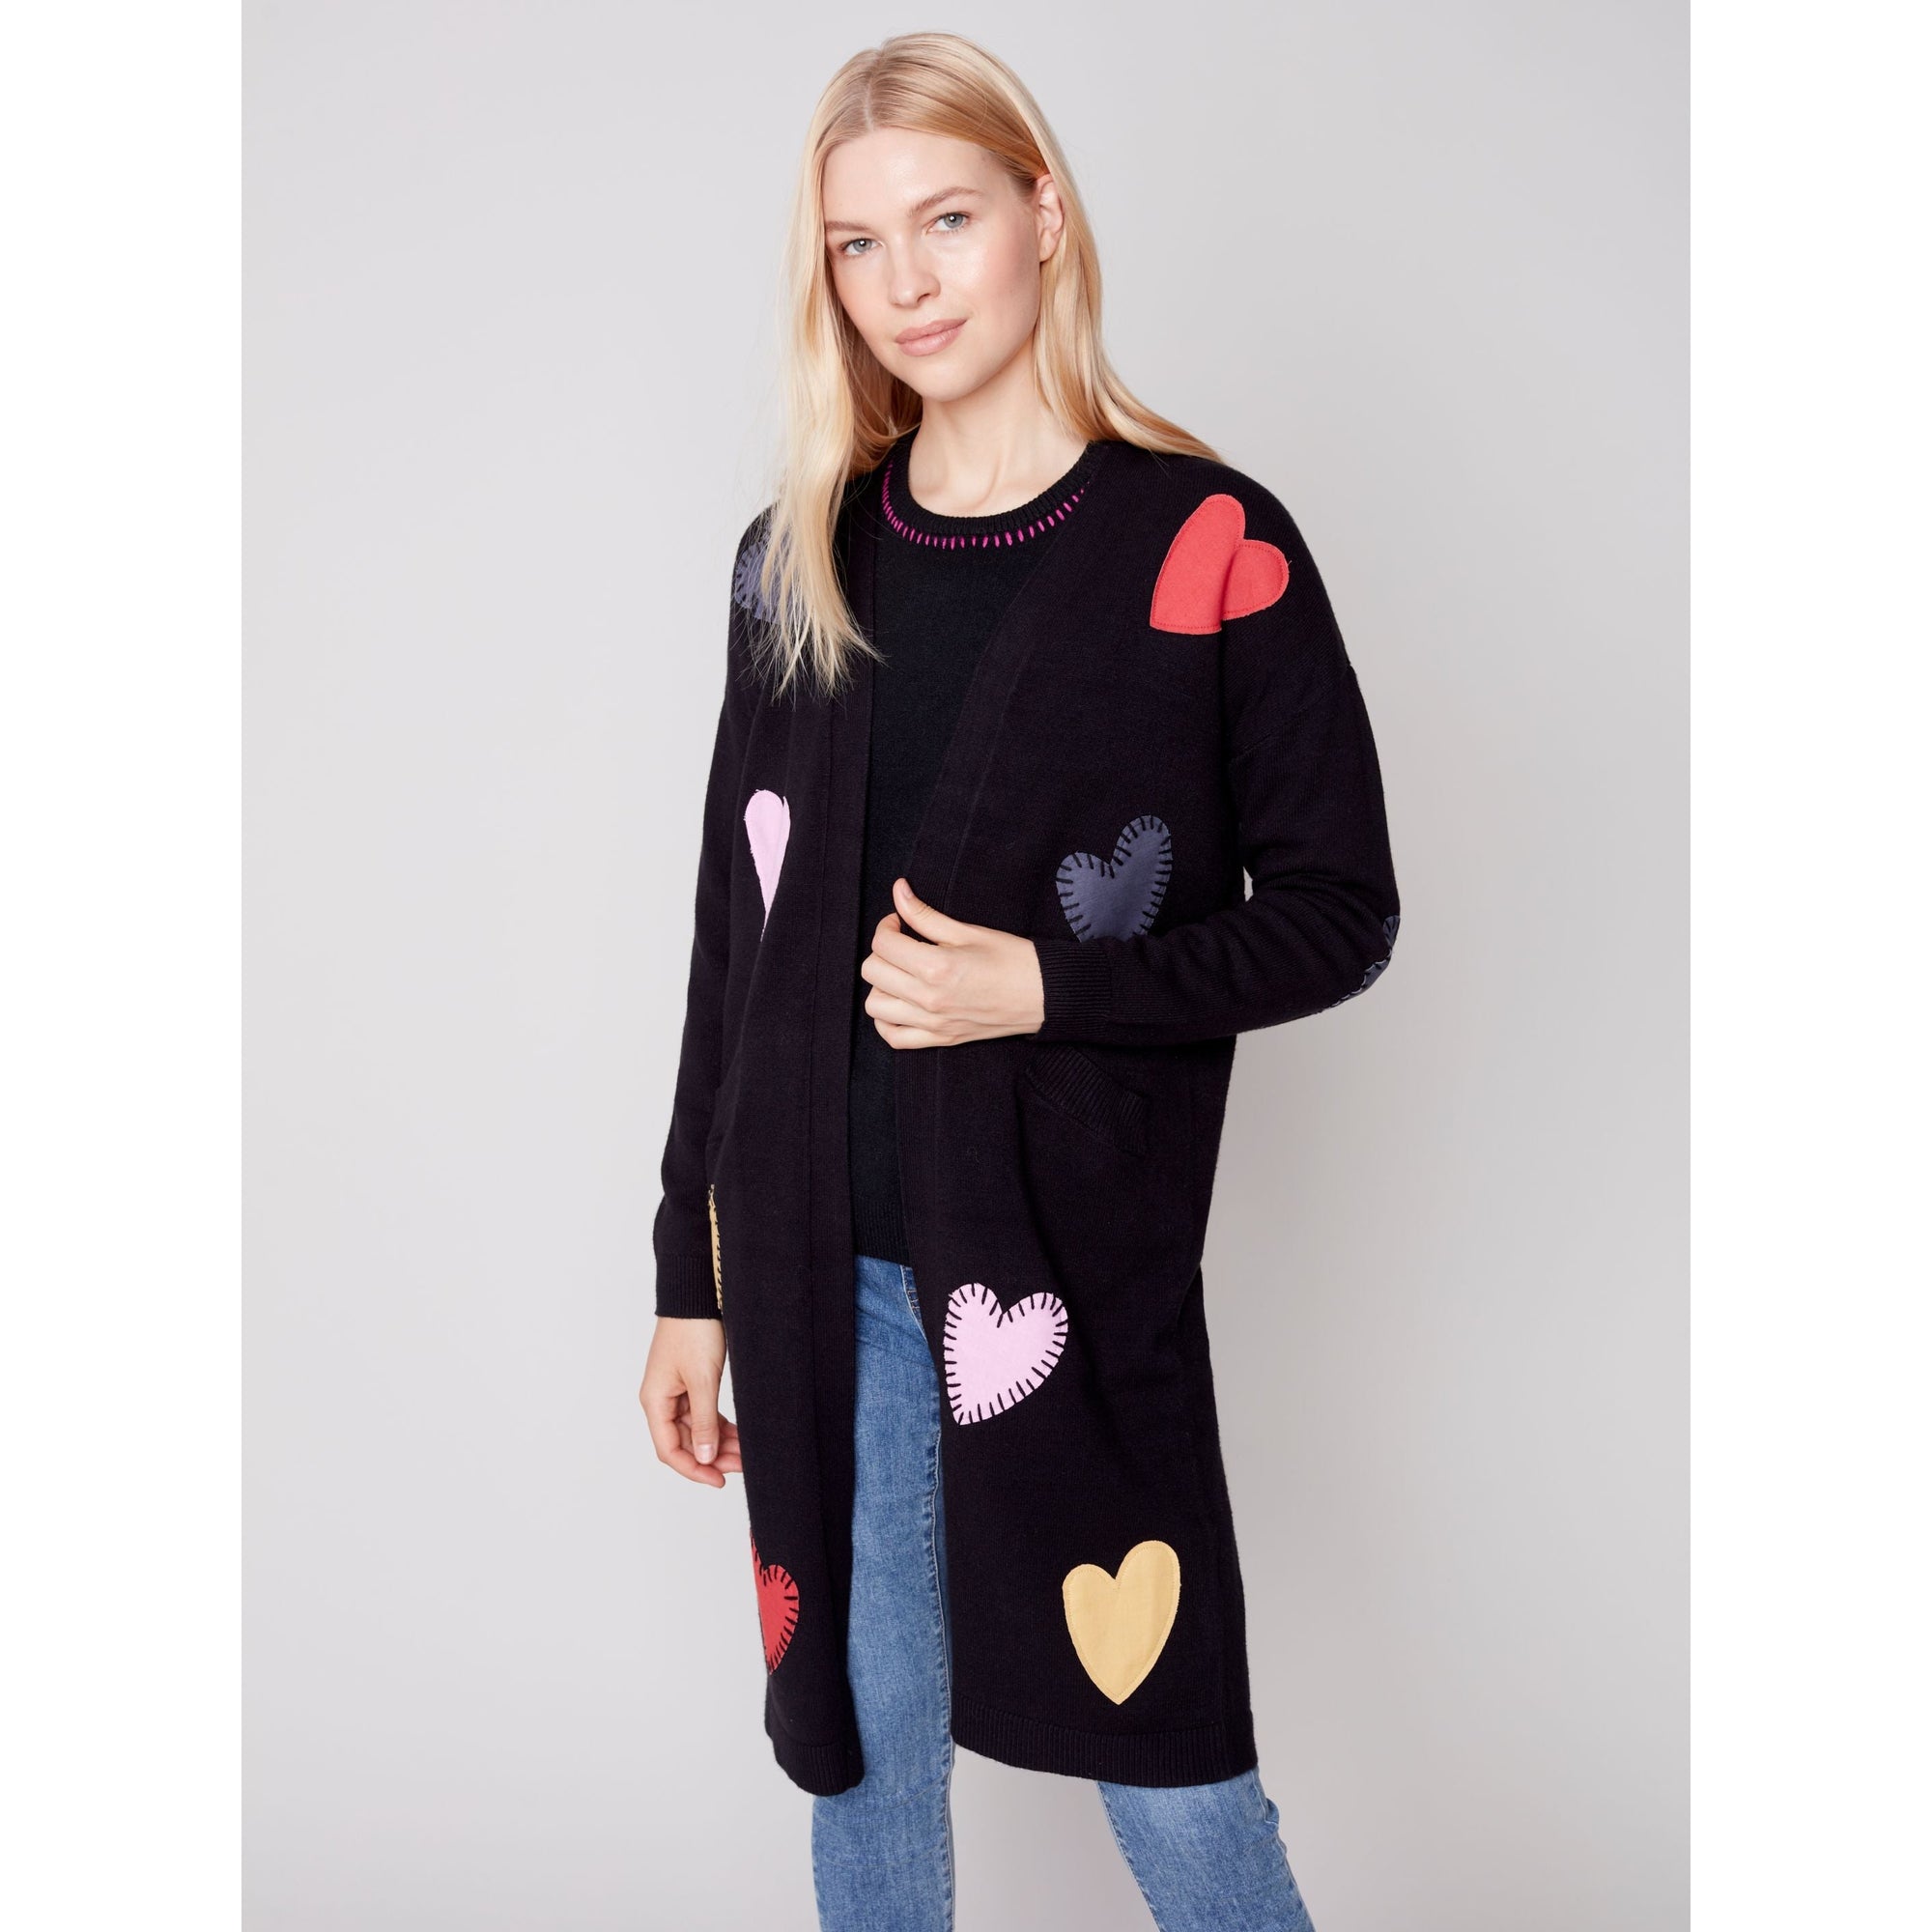 HEART APPLIQUÉ LONG CARDIGAN-Jackets & Sweaters-CHARLIE B-SMALL-Black-Coriander